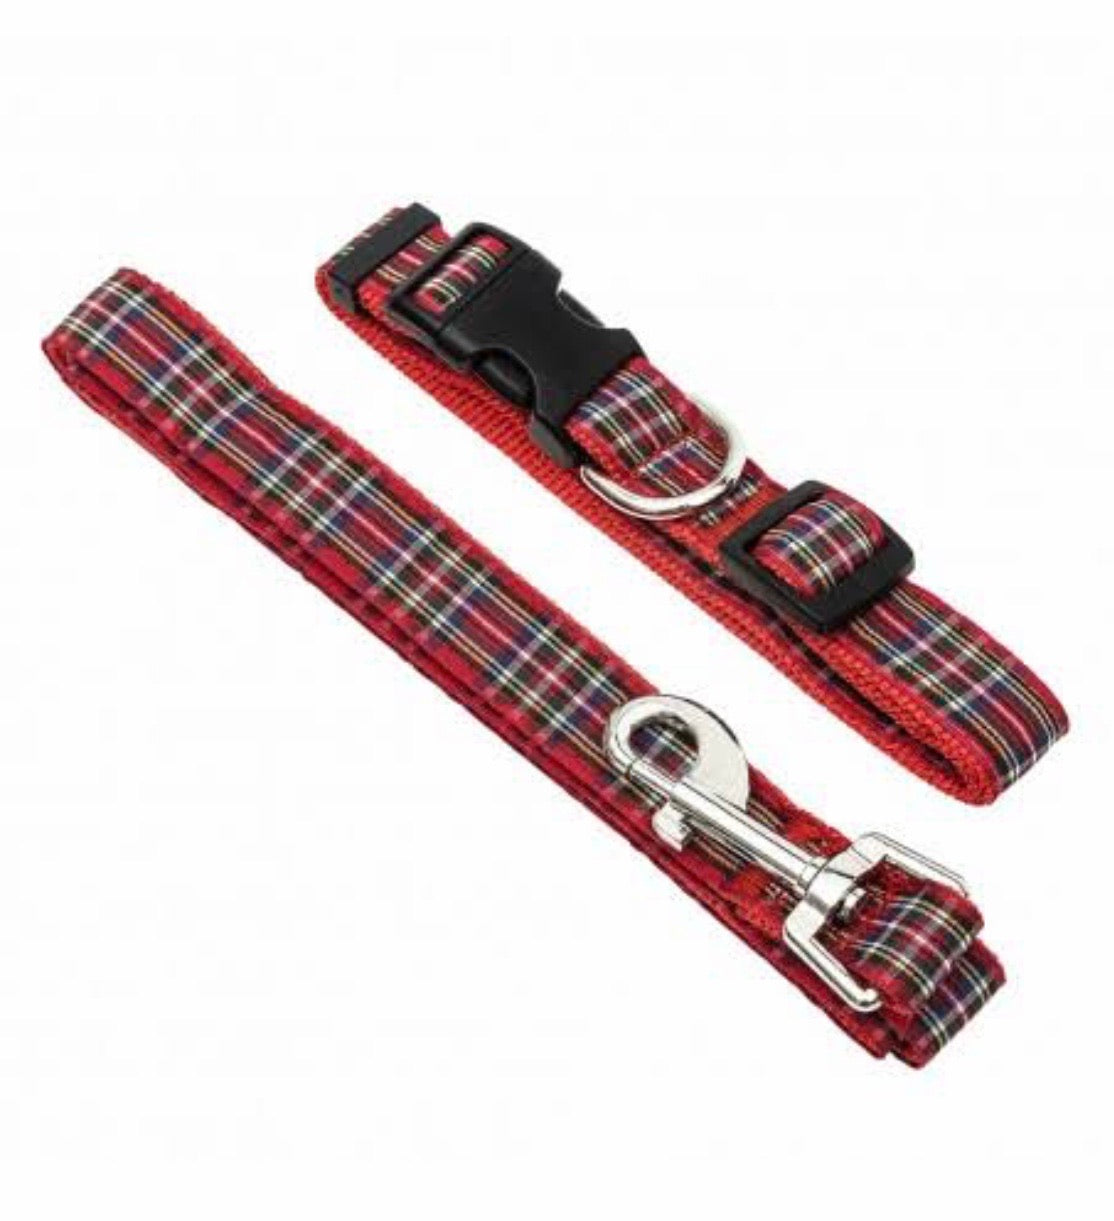 Tartan dog lead and matching collar